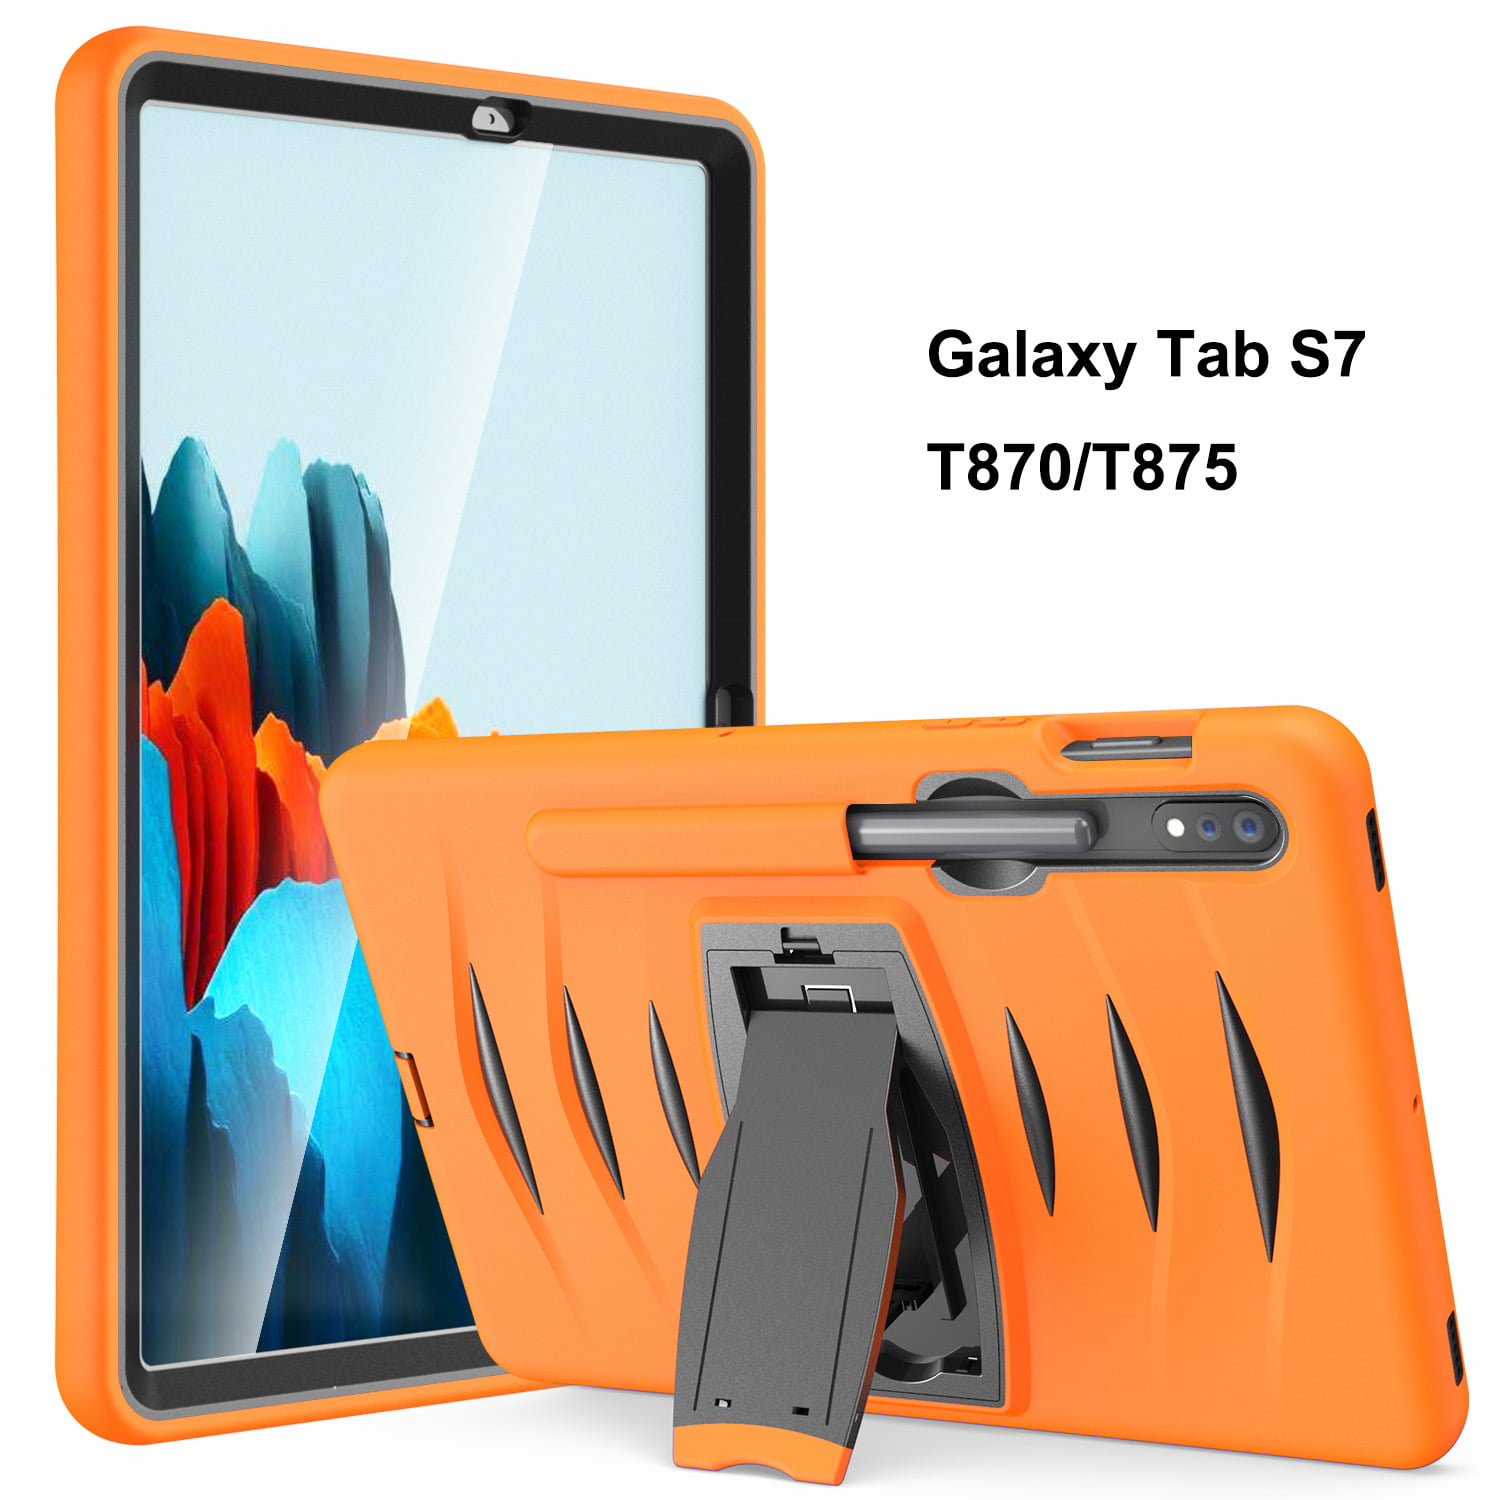 bar Gevoelig voor Terminal samsung galaxy 7 tablet case Off 60% - canerofset.com